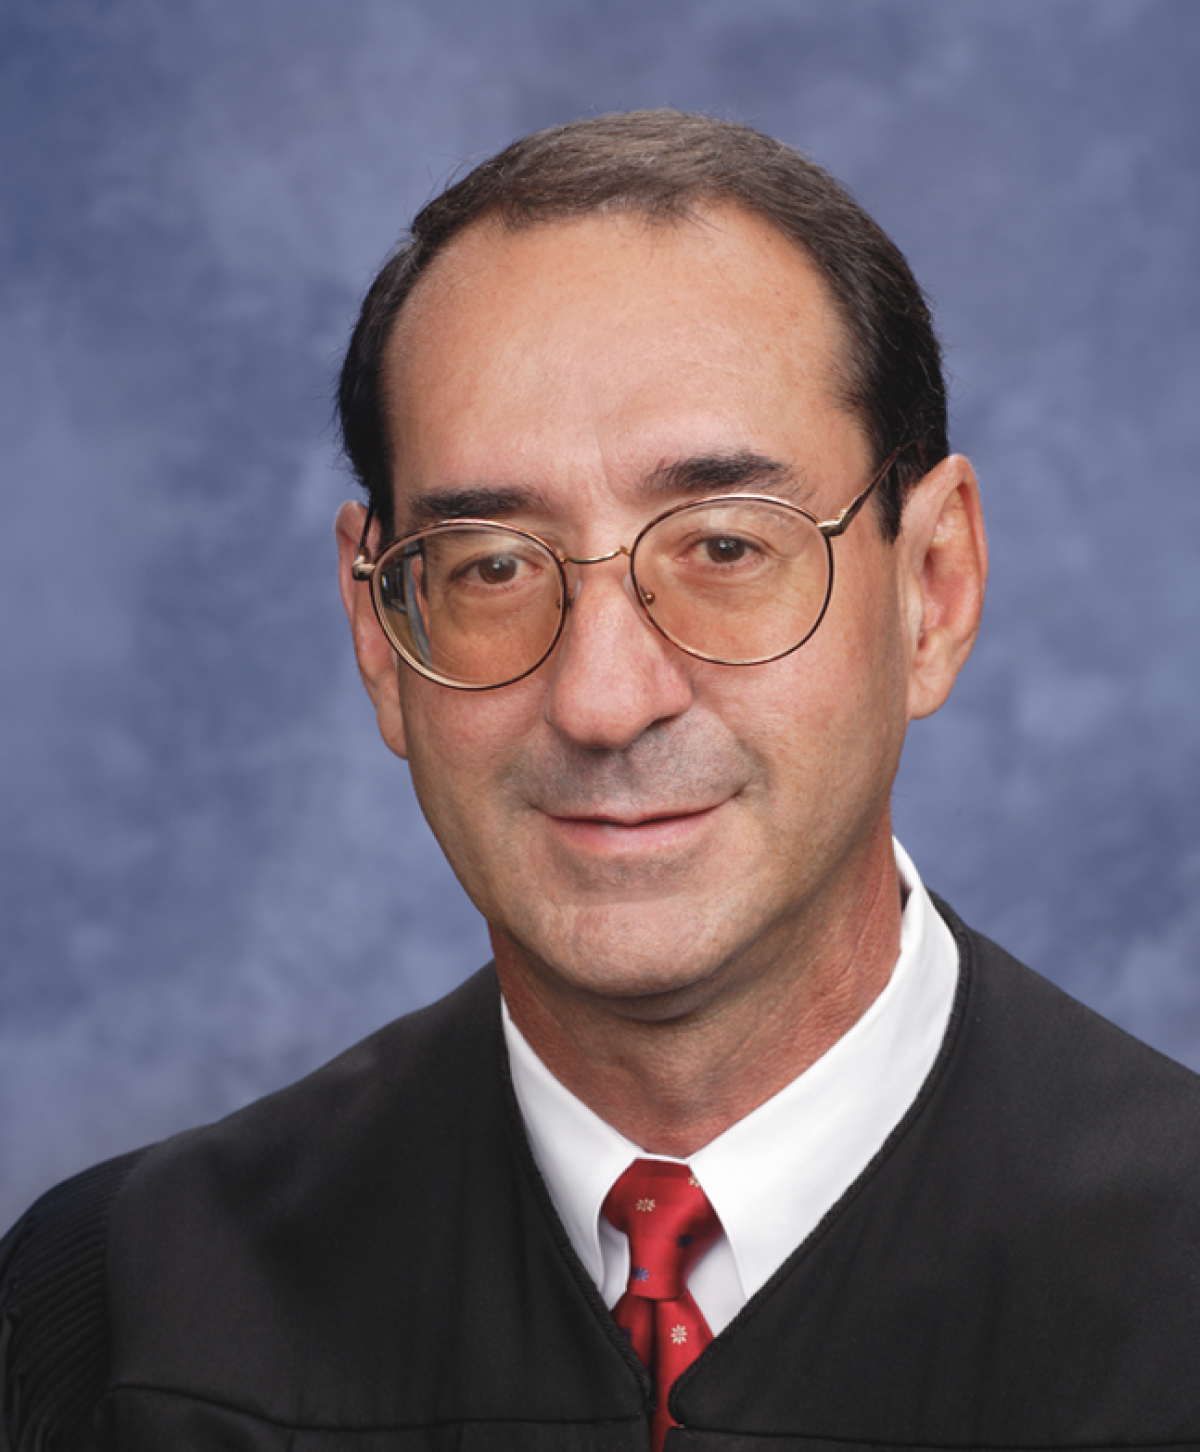 U.S. District Judge Roger Benitez